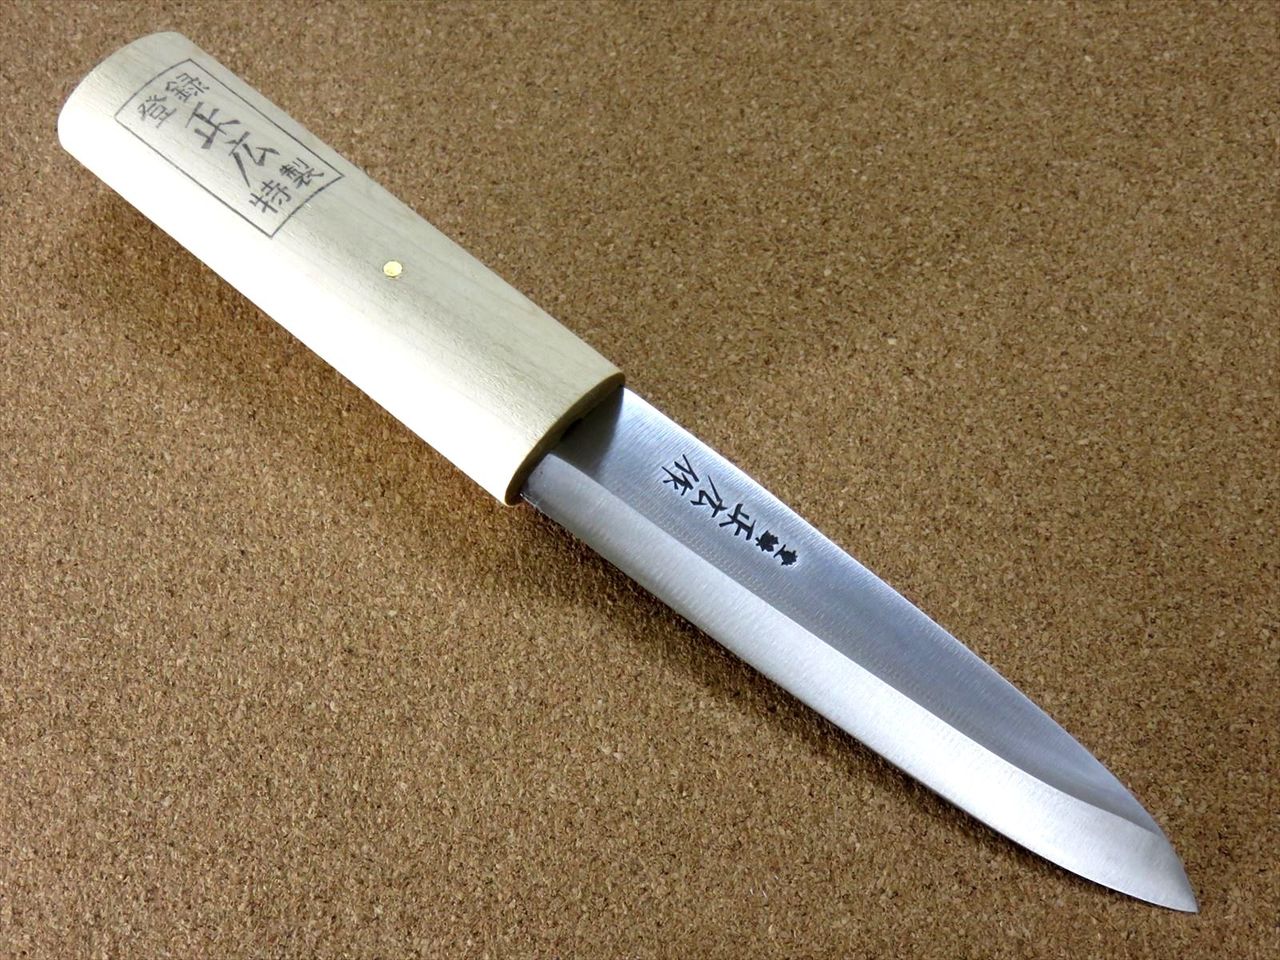 Masahiro 40931 Hagane Cutting Knife, 5.3 Inches (135 mm) (with Sheath)